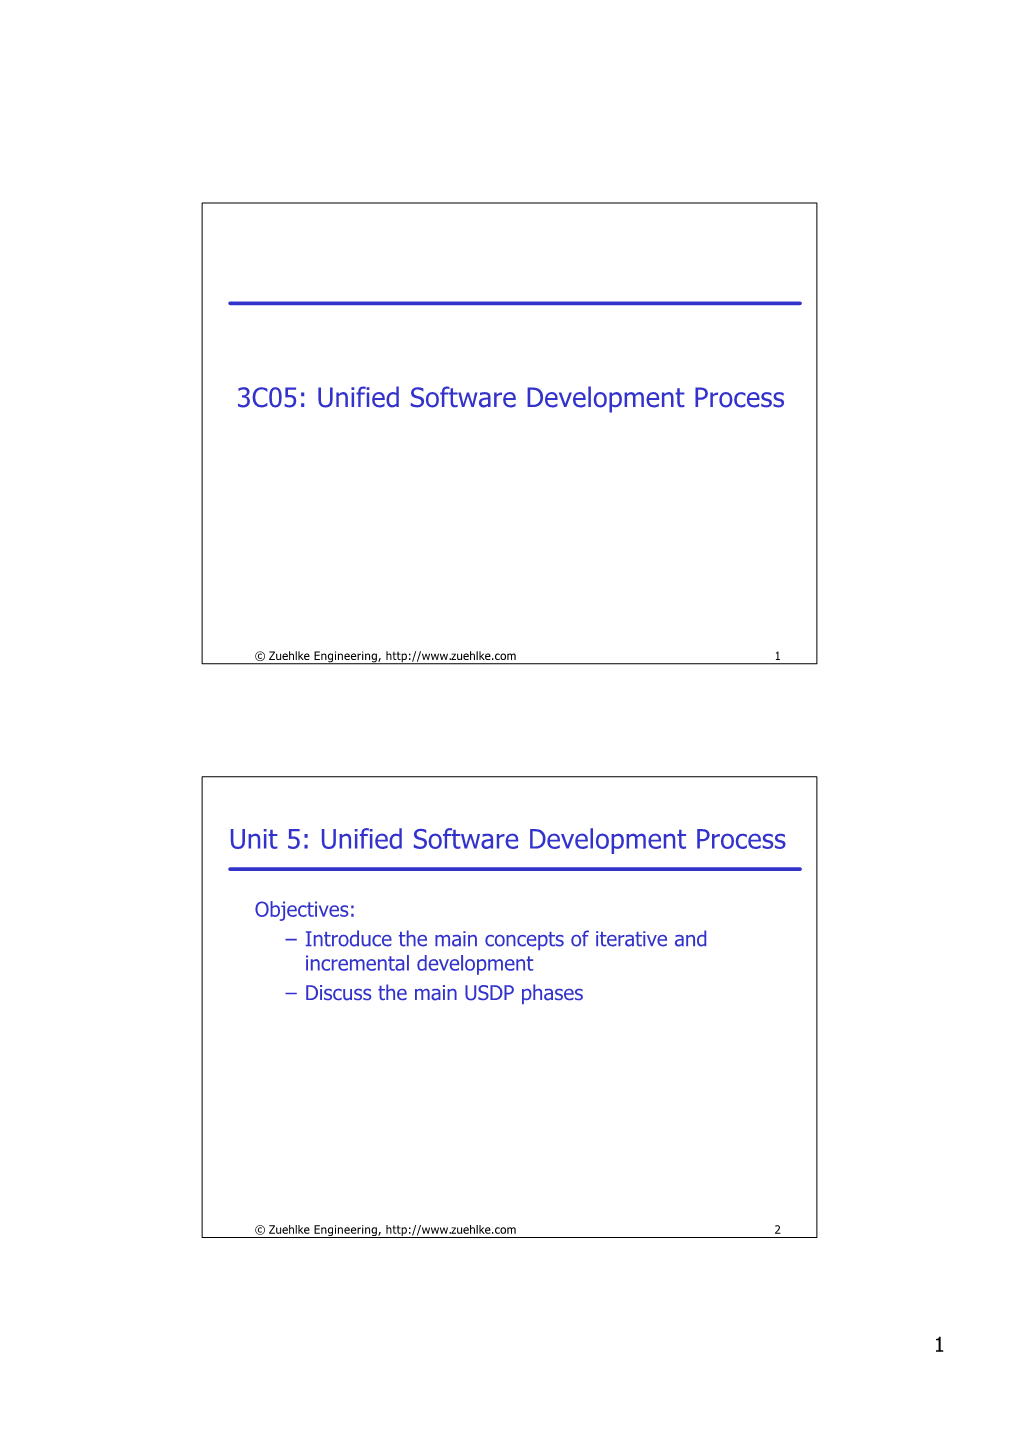 3C05: Unified Software Development Process Unit 5: Unified Software